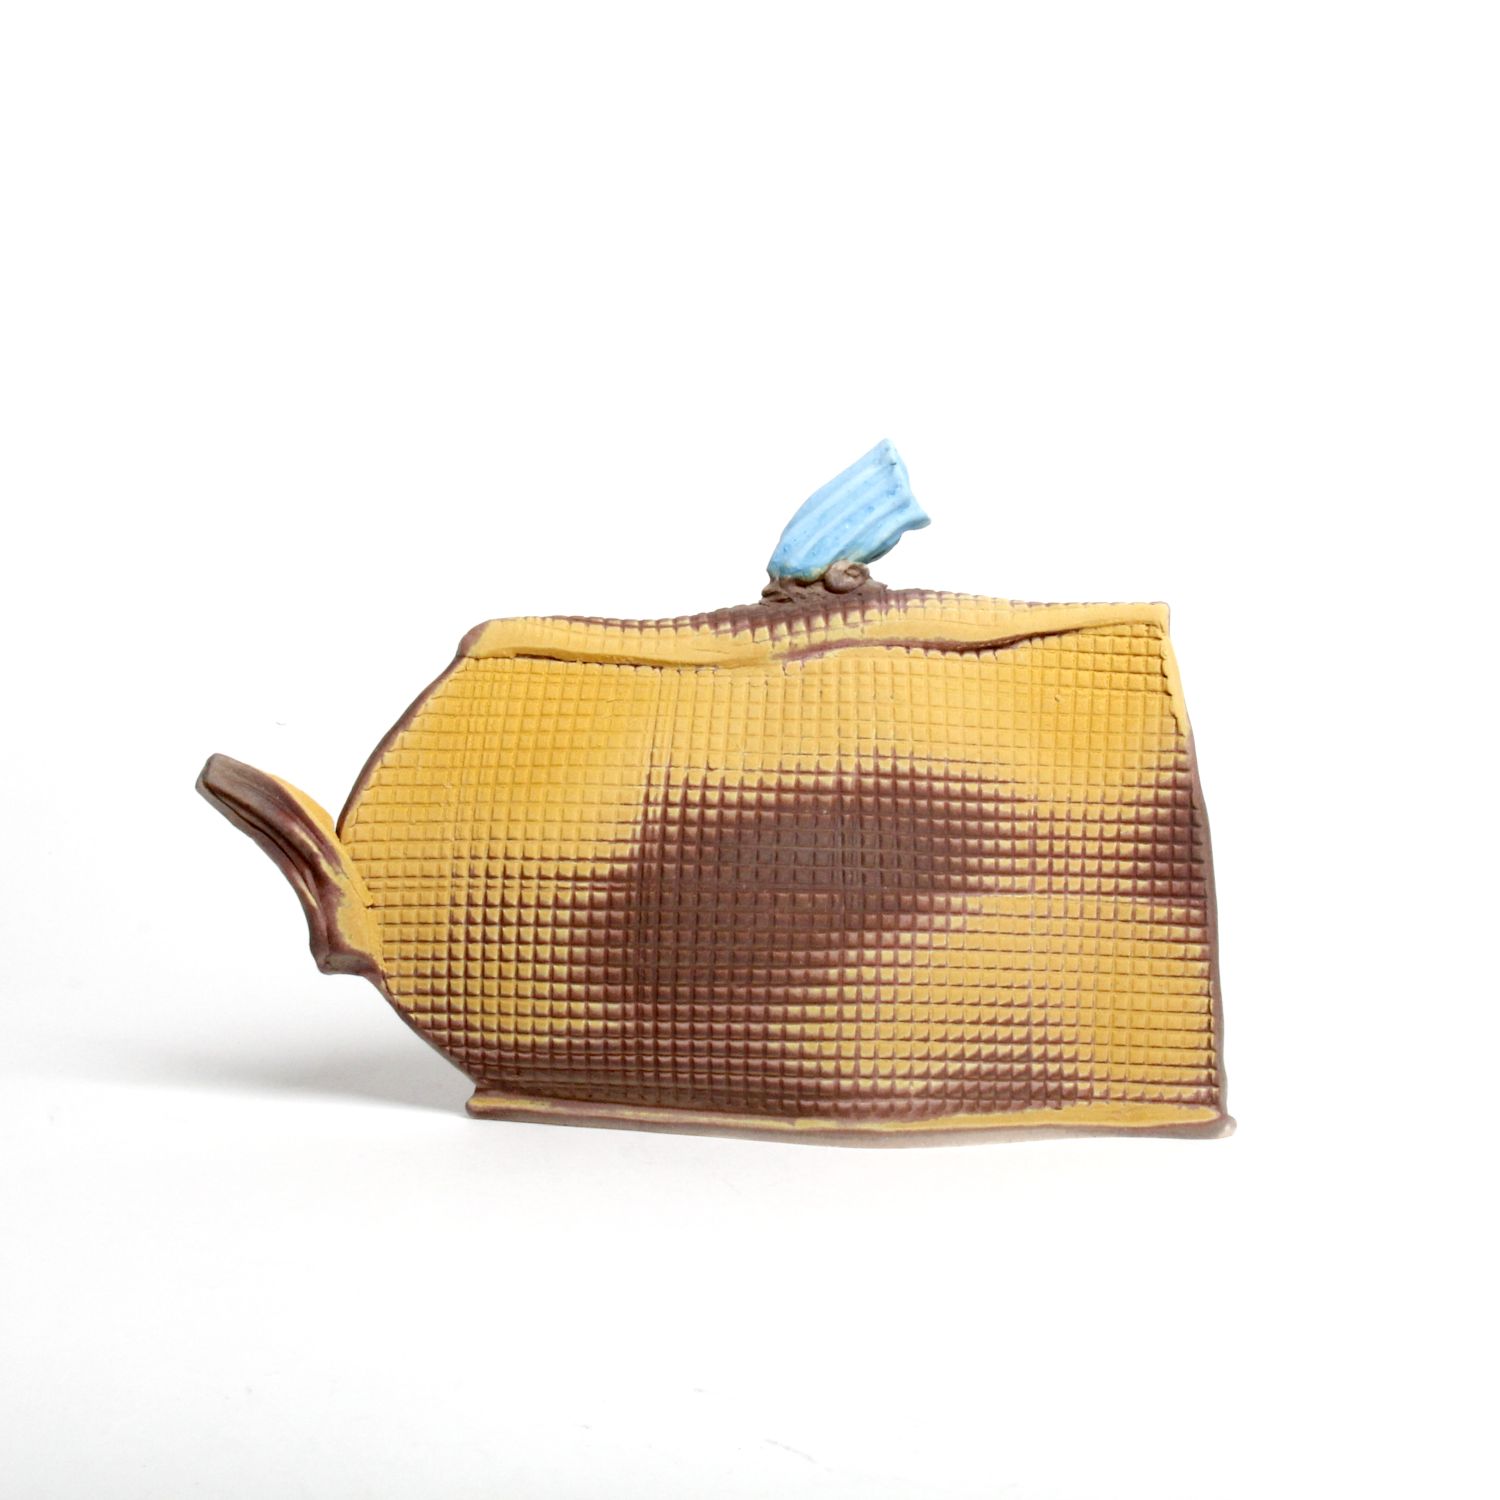 Shu-Chen Cheng: Yellow Flat Teapot Sculpture Product Image 1 of 4